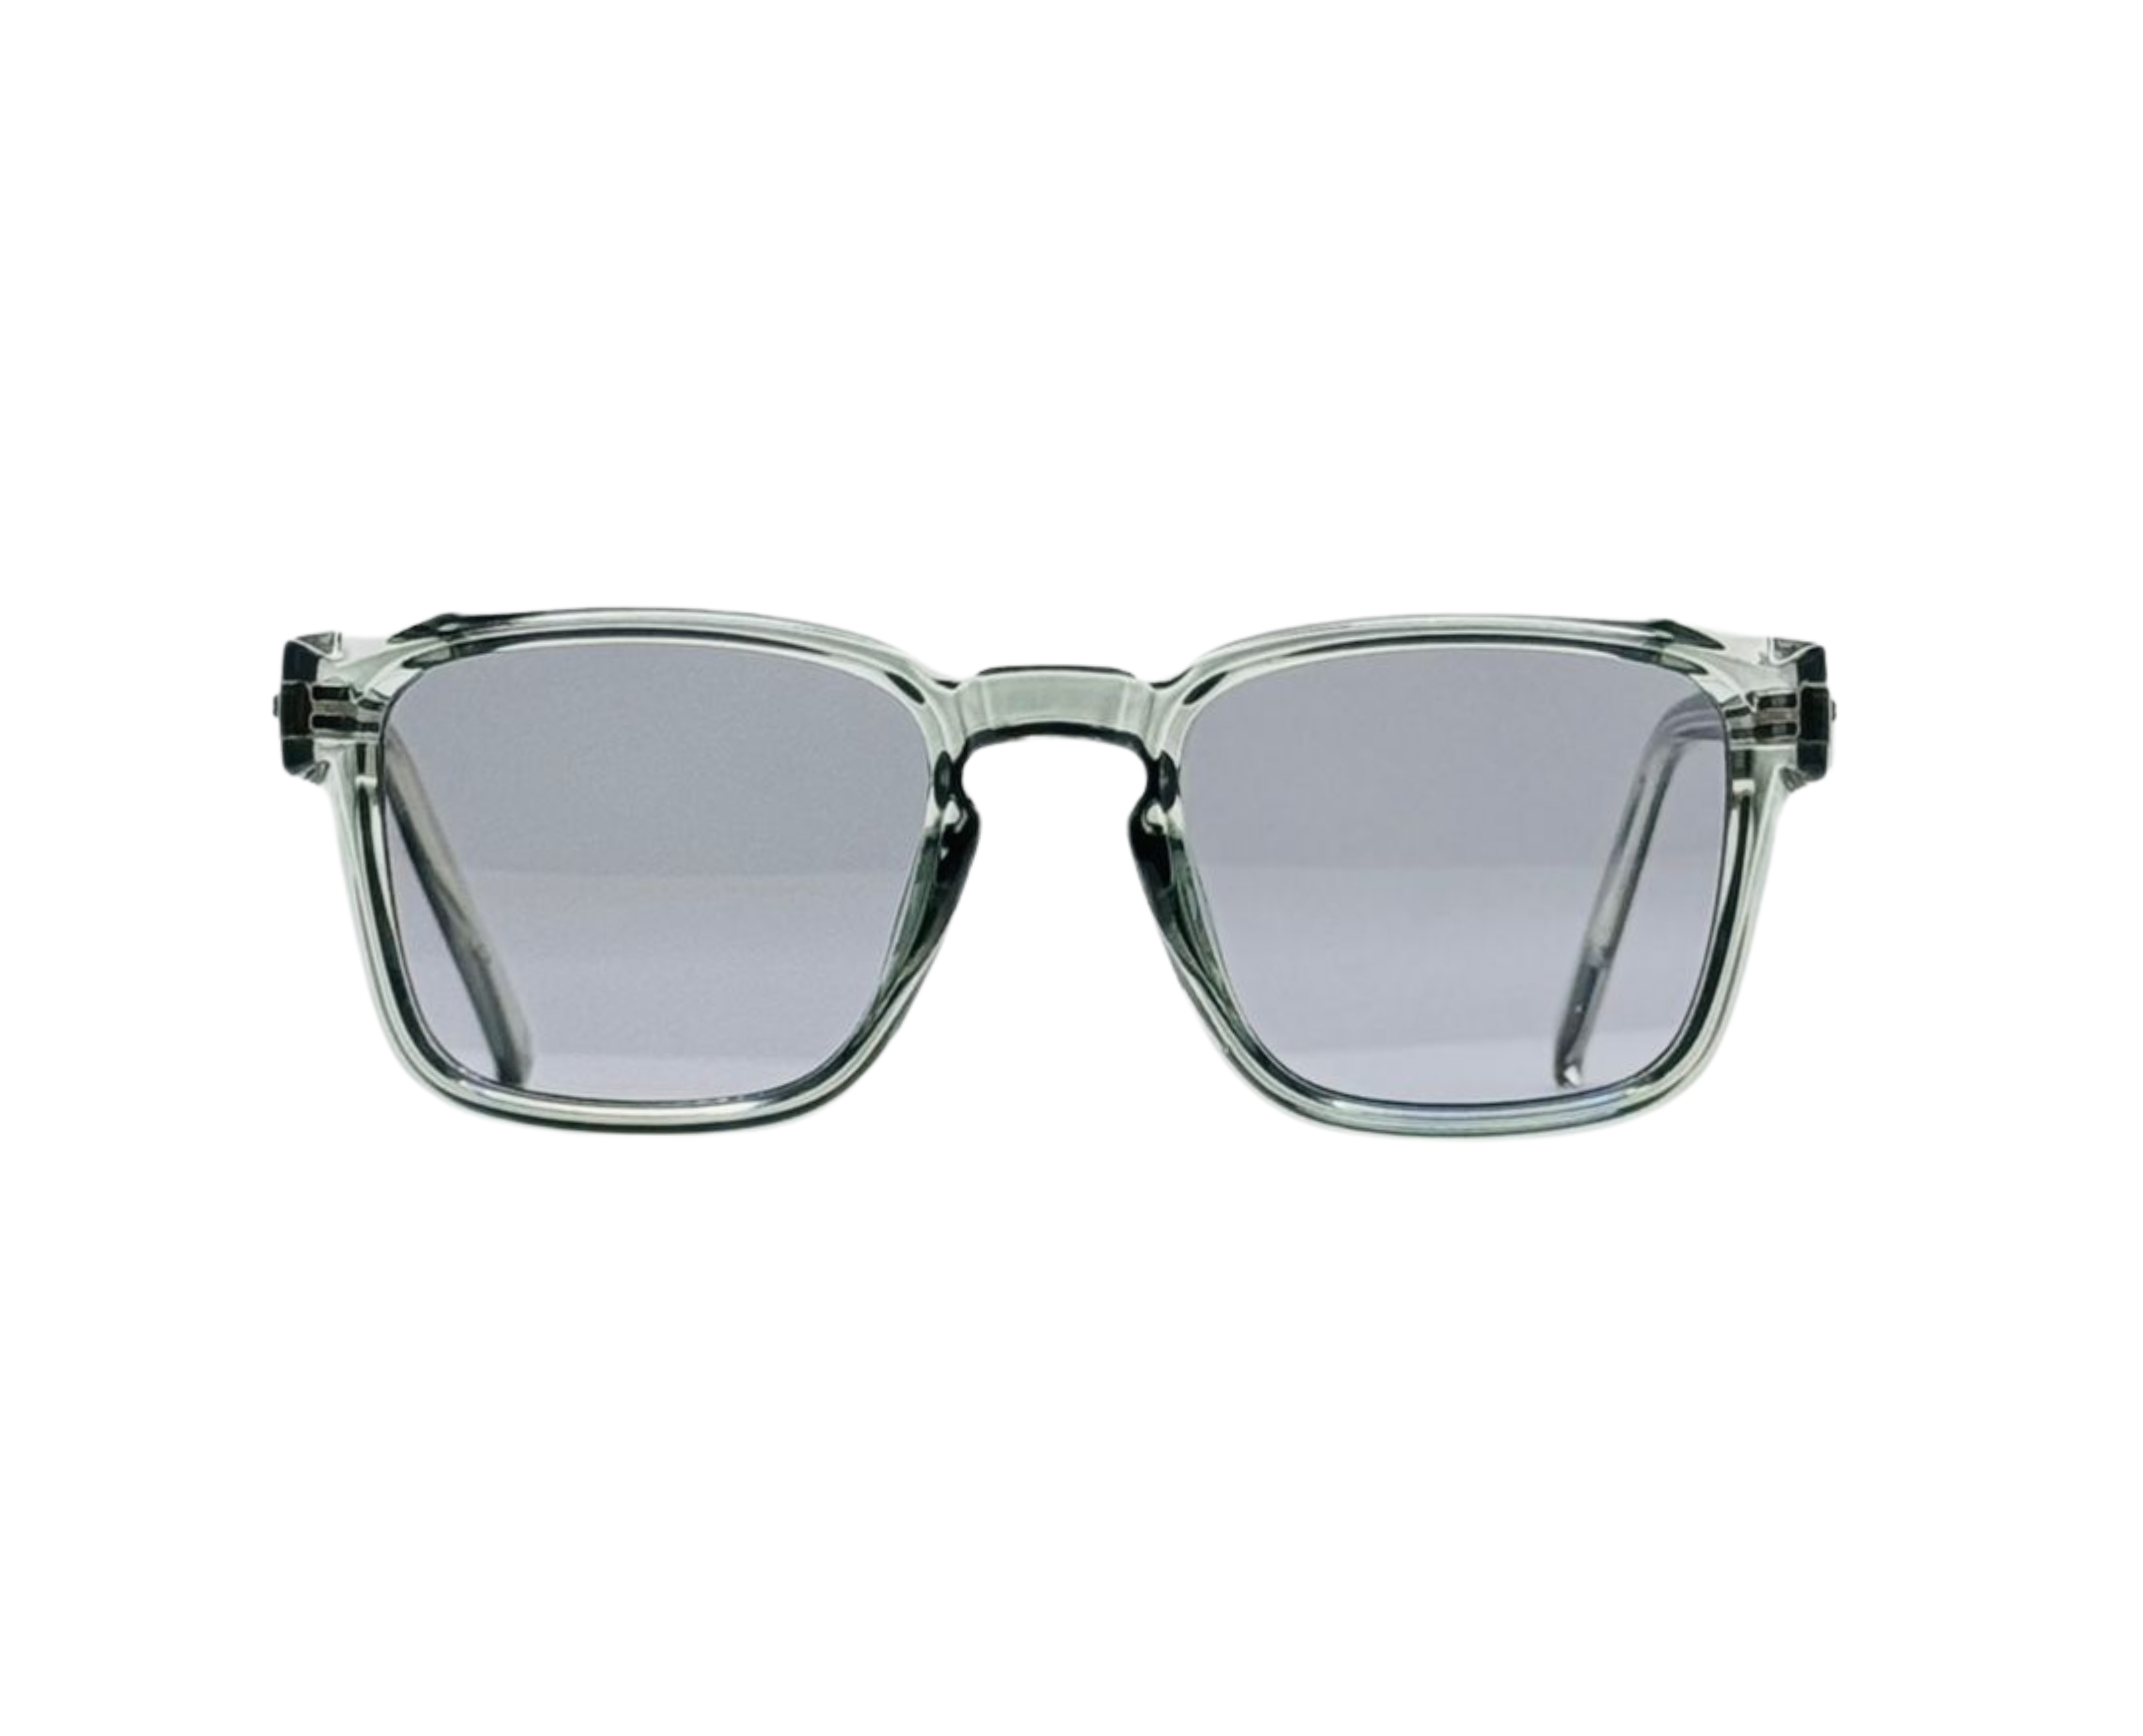 NS Luxury - 9829 - Grey - Sunglasses